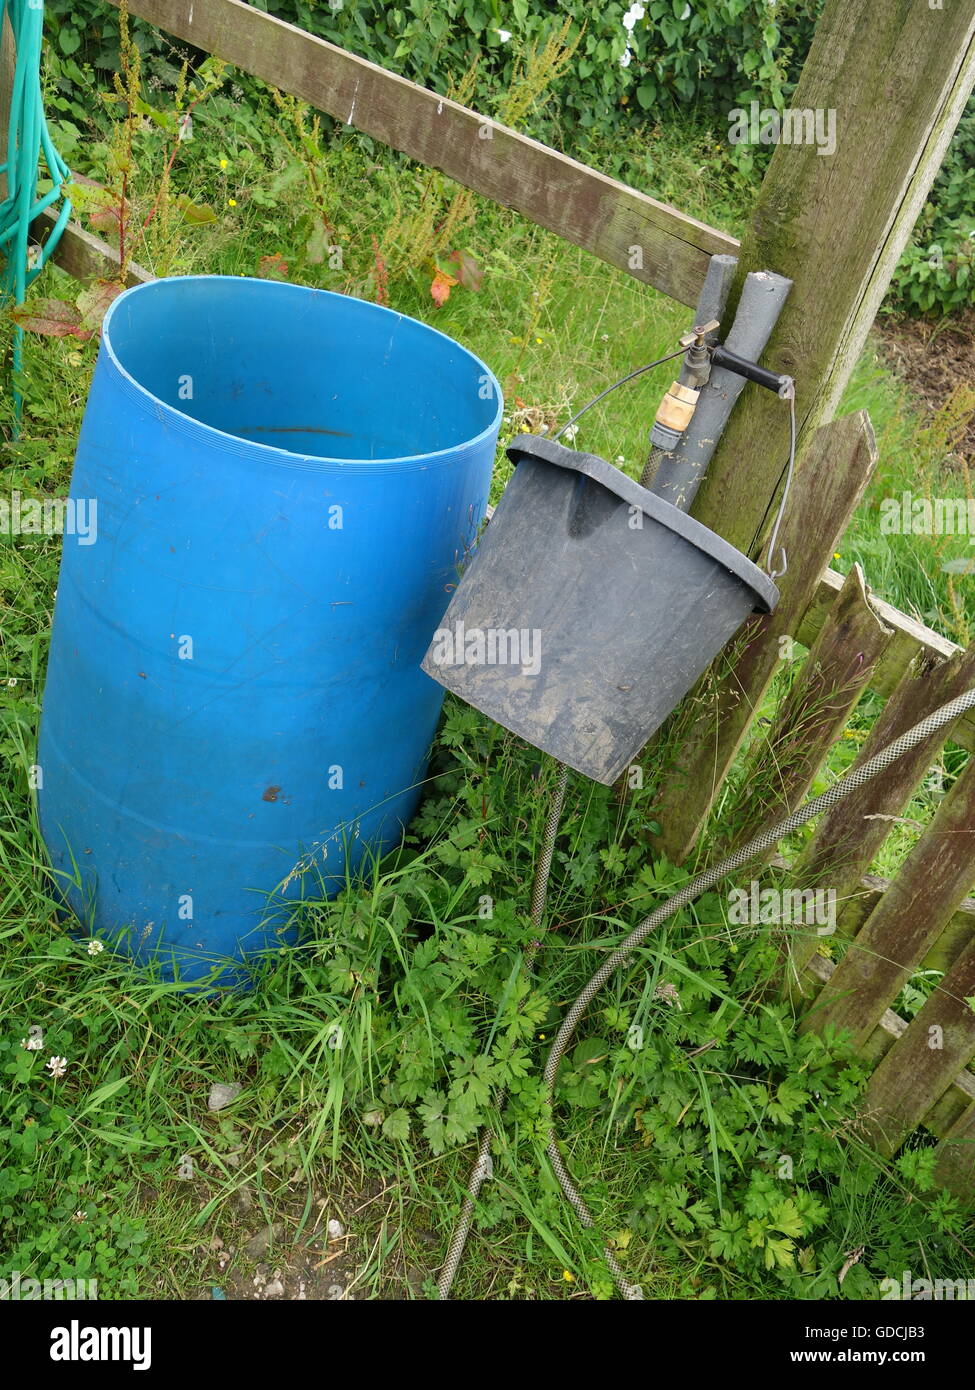 bucket full of water Stock Photo - Alamy